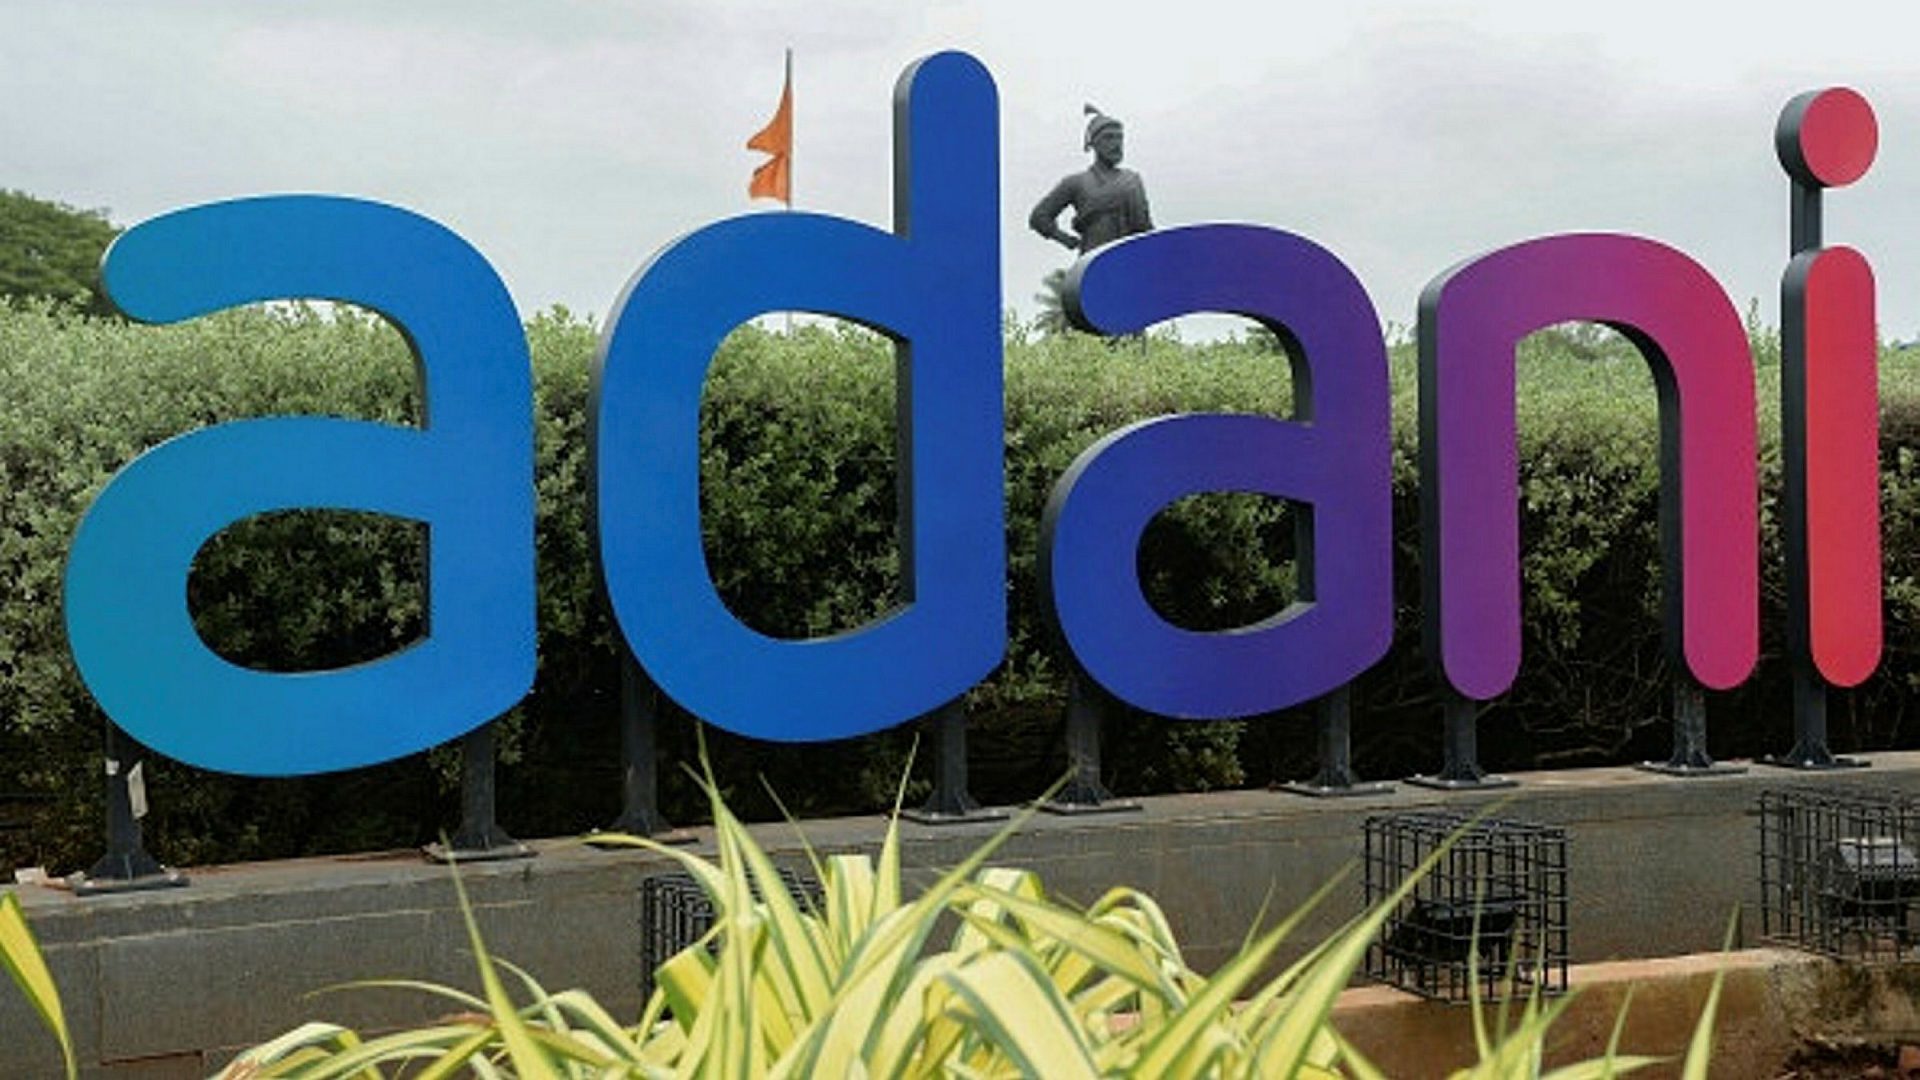 adani enterprises bursts into top 10 most valuable firm club, shares soar 3% - equitypandit